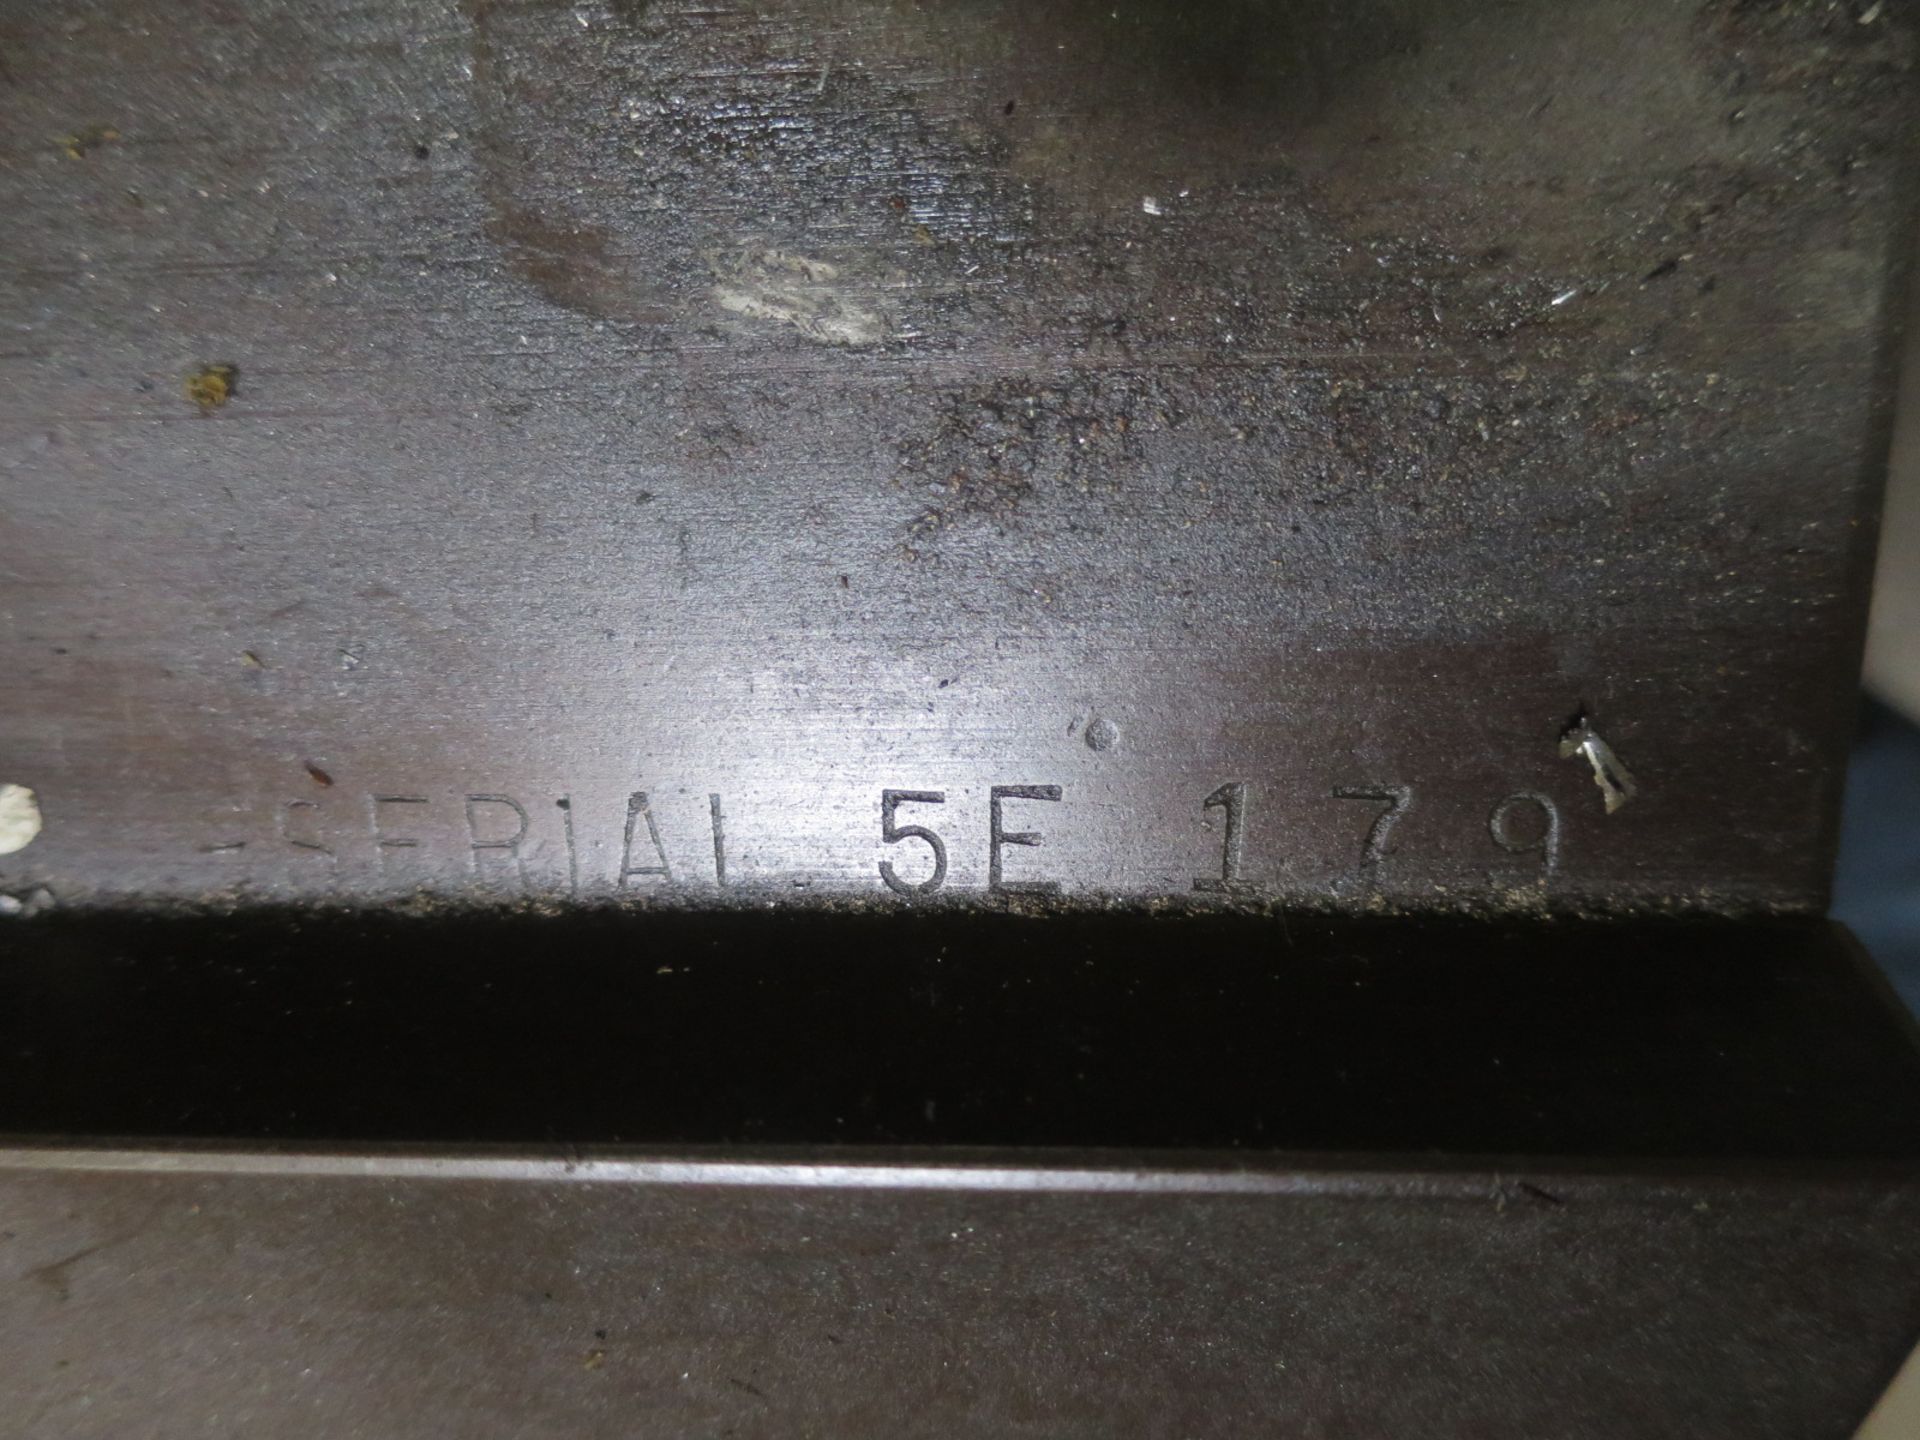 19"x54" Leblond Regal Toolroom Engine Lathe, S/N 5E179 - Image 11 of 11